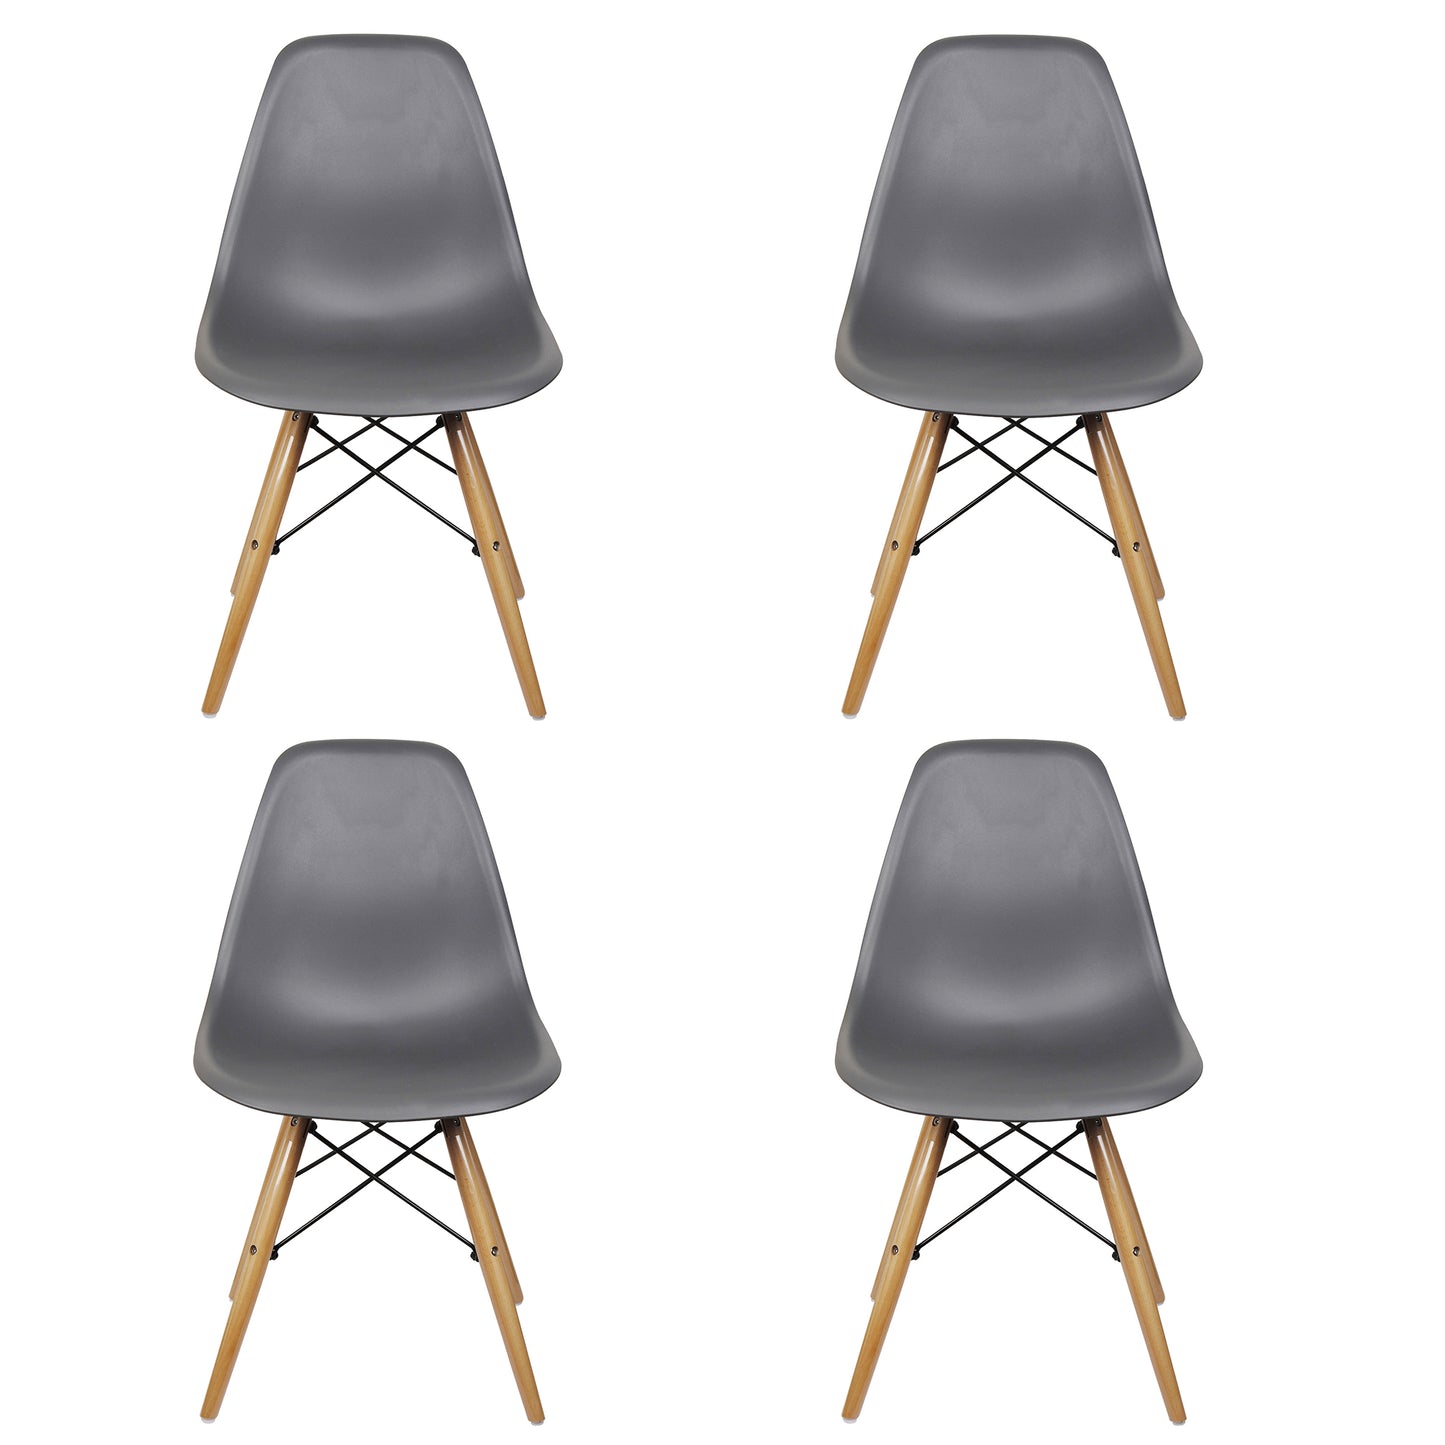 GIA Plastic Armless Chair Wood Legs-Dark Gray